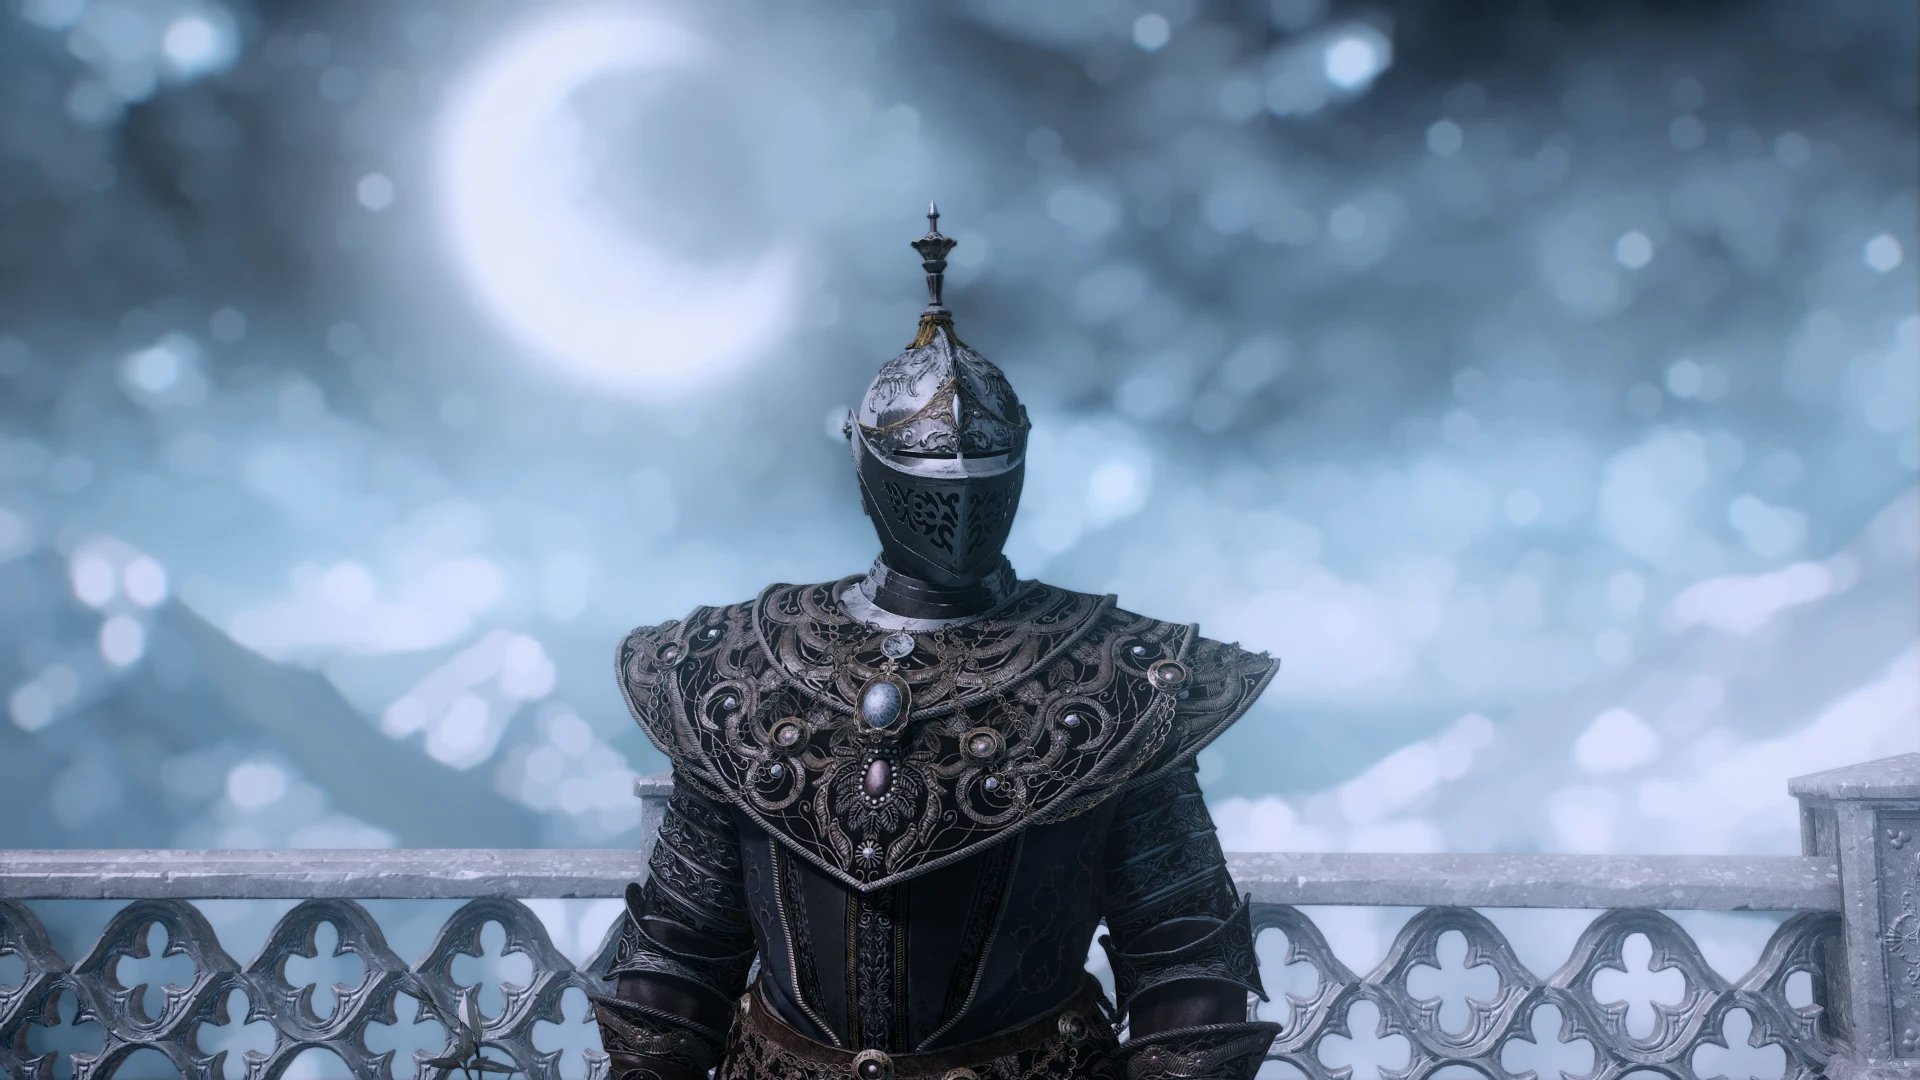 Carian Knight Set